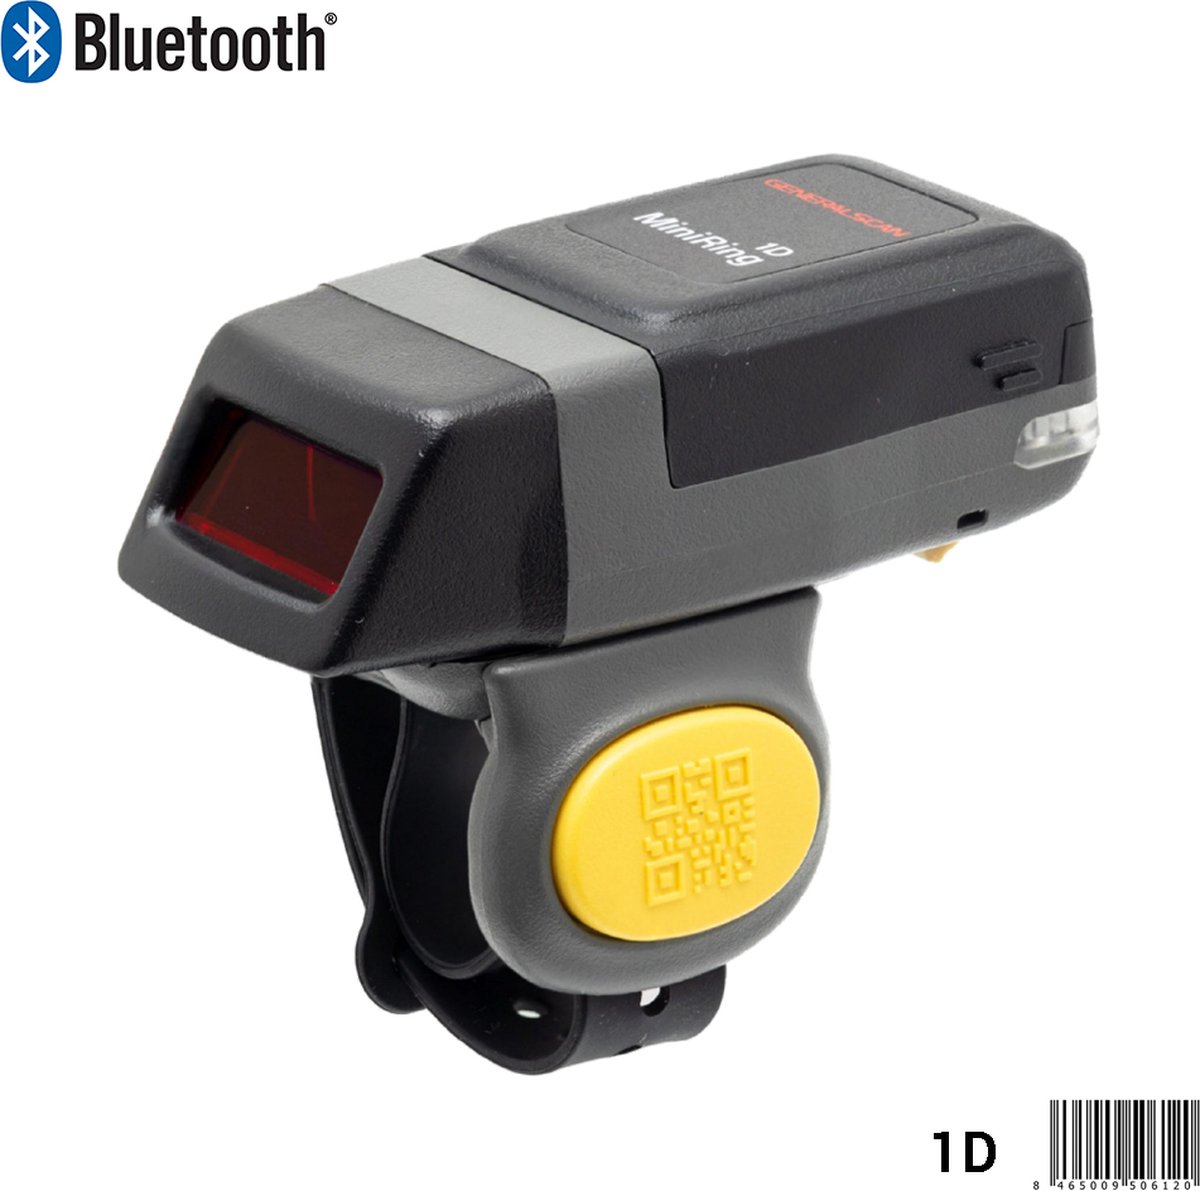 Generalscan GS R1120 - Bluetooth 1D Barcode scanner - Ringscanner - 1D-barcodes - Handscanner